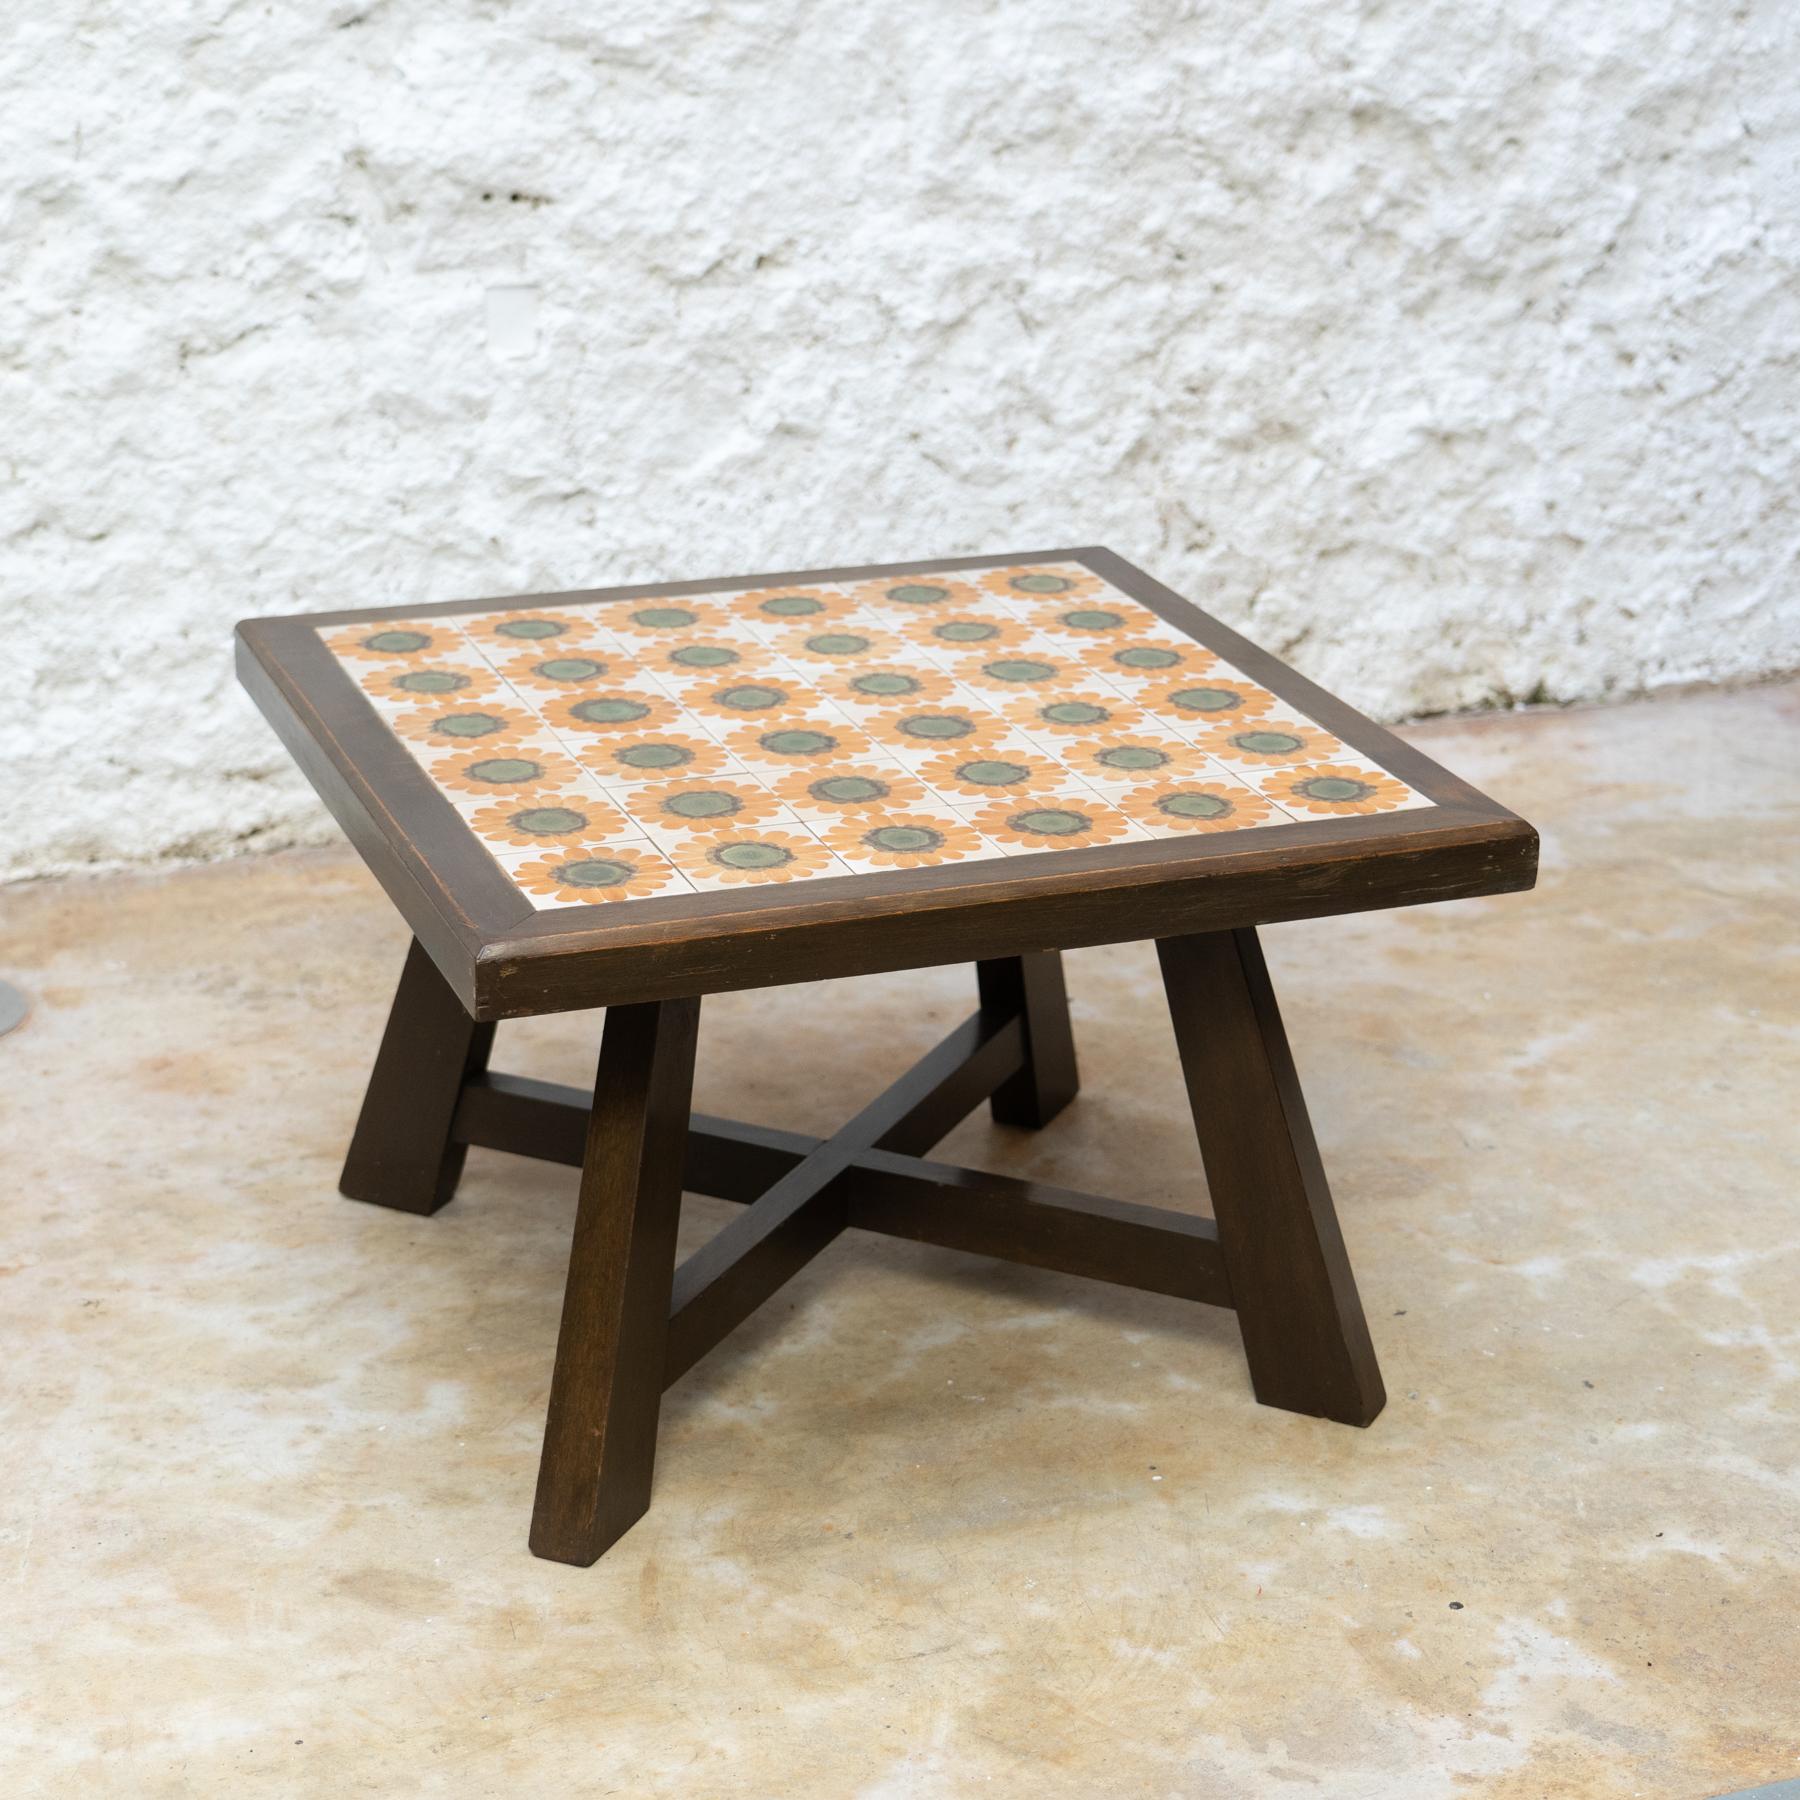 Mid-Century Modern Jordi Vilanova Wood and Ceramic Coffee Table: Spanish Mid-century Masterpiece For Sale